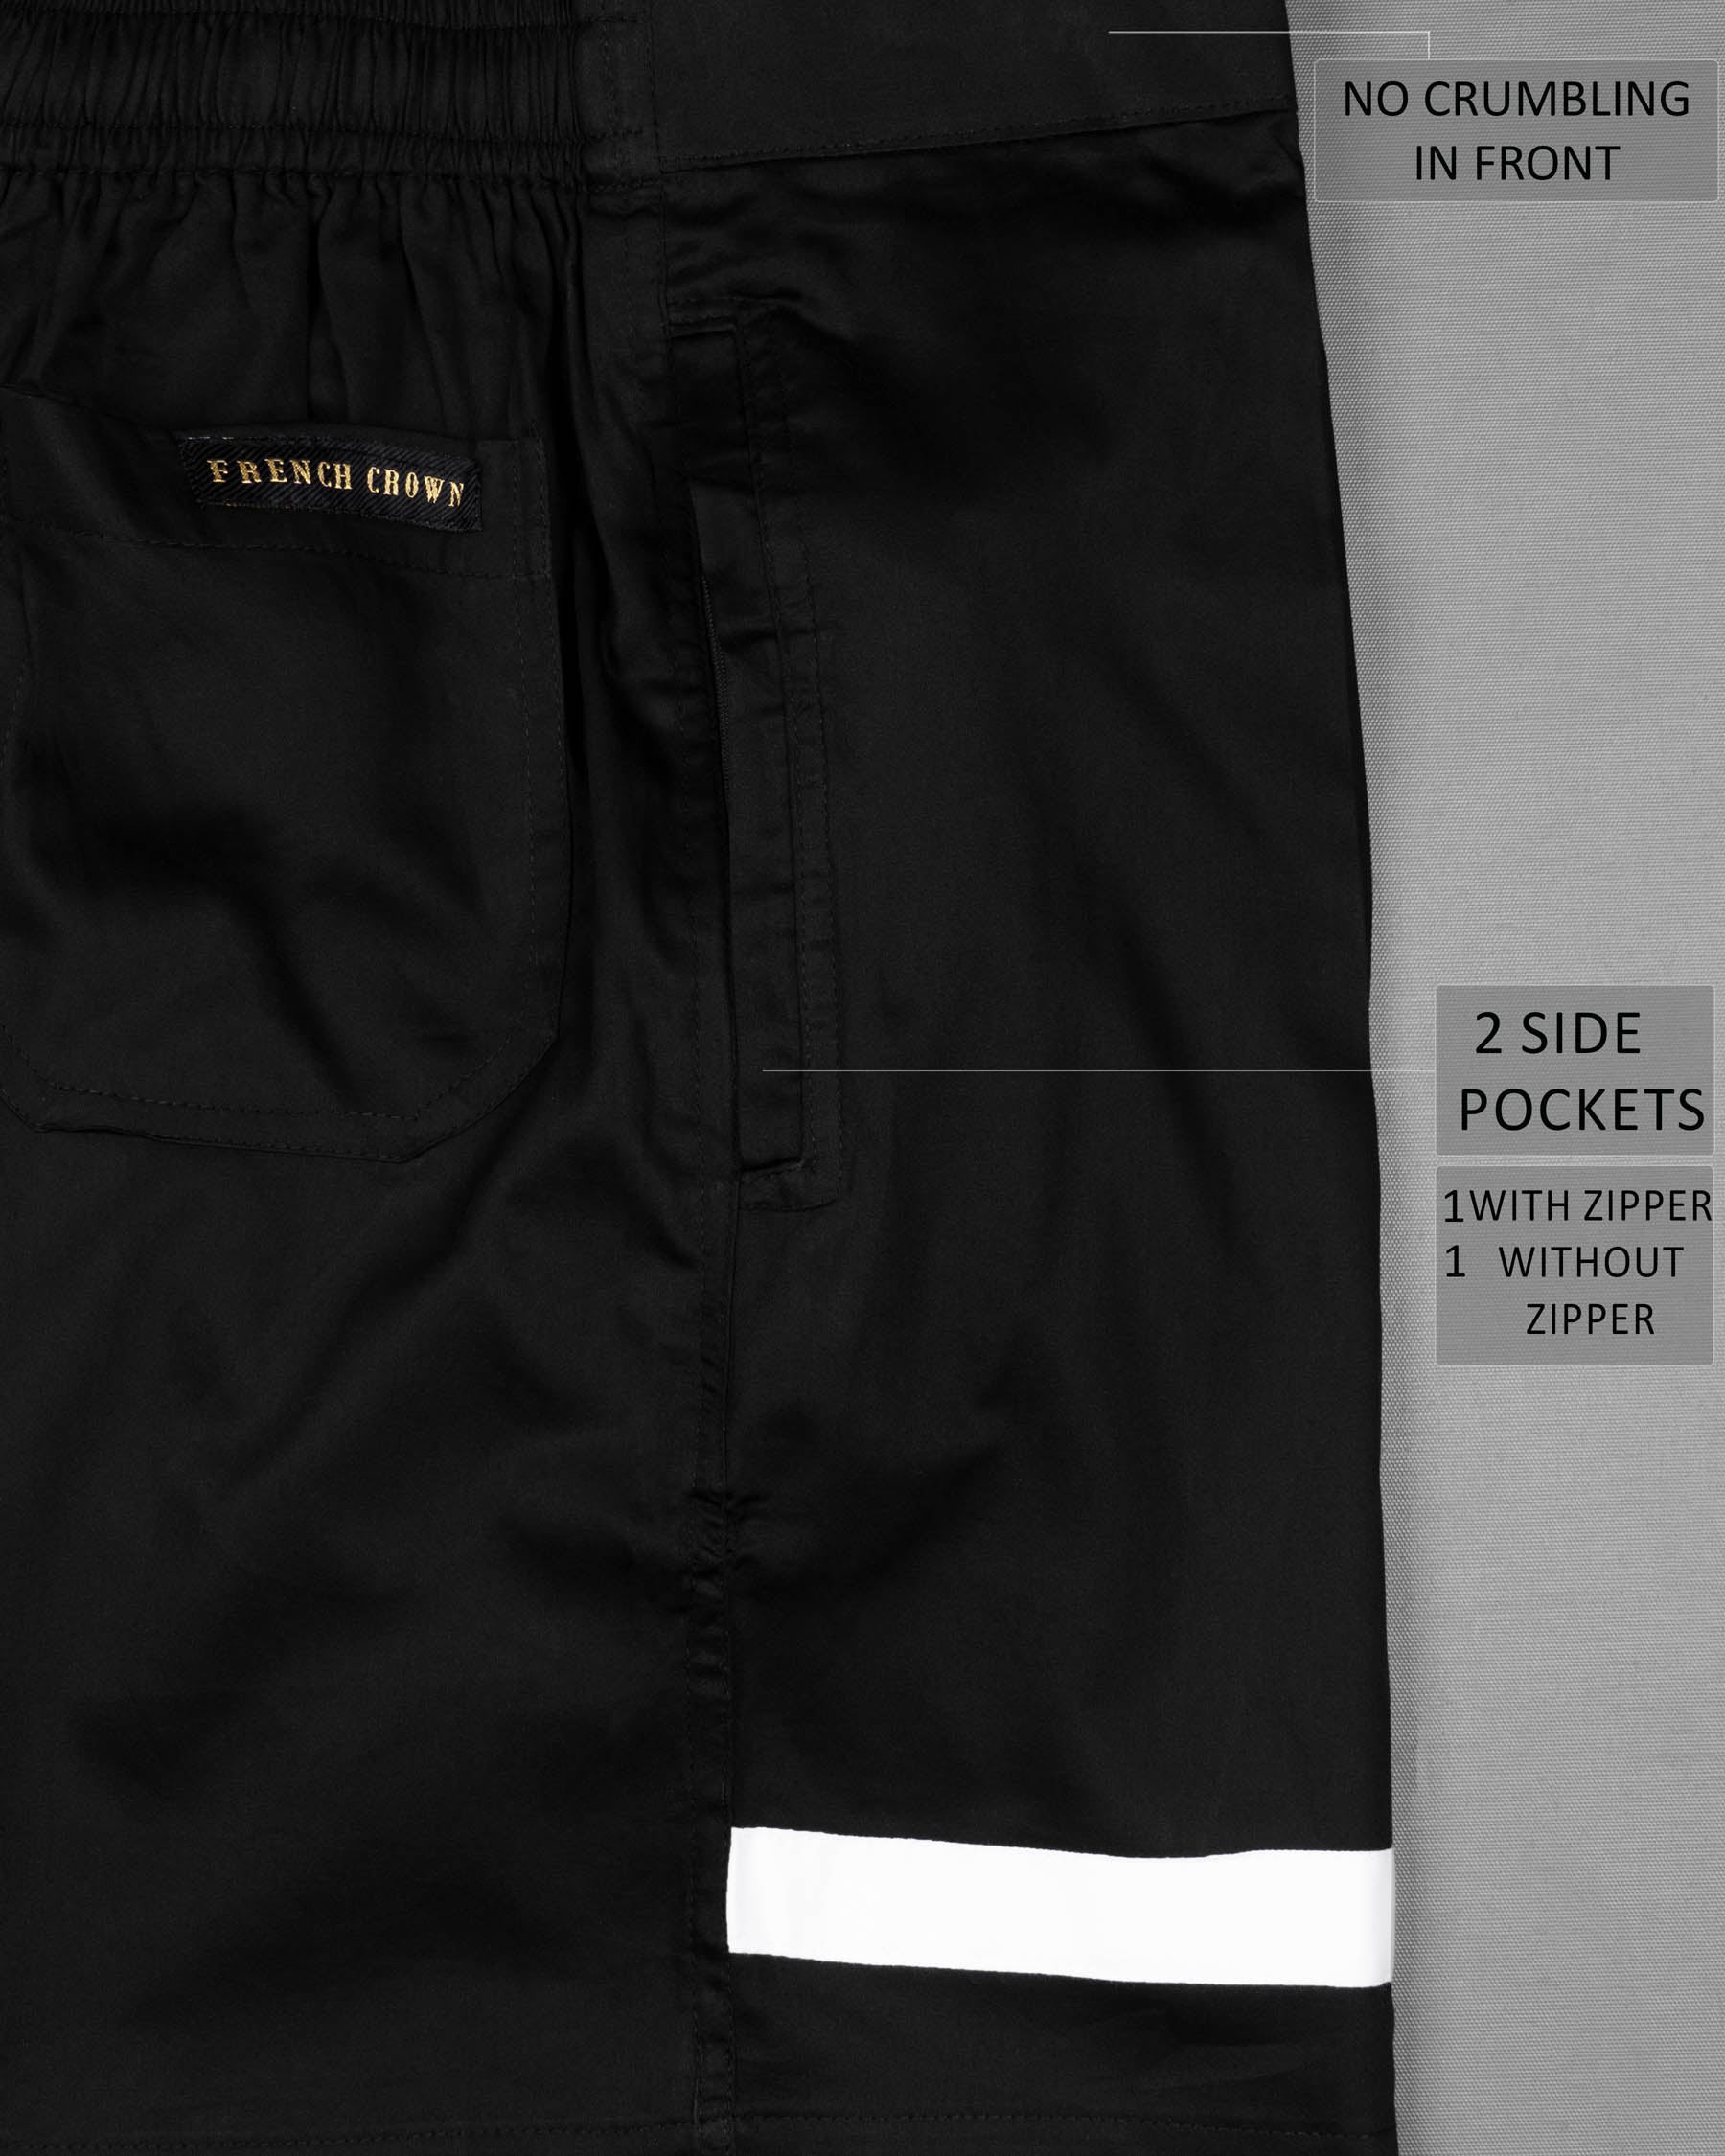 Jade Black with White Striped Super Soft Premium Cotton Designer Shorts SR153-28, SR153-30, SR153-32, SR153-34, SR153-36, SR153-38, SR153-40, SR153-42, SR153-44